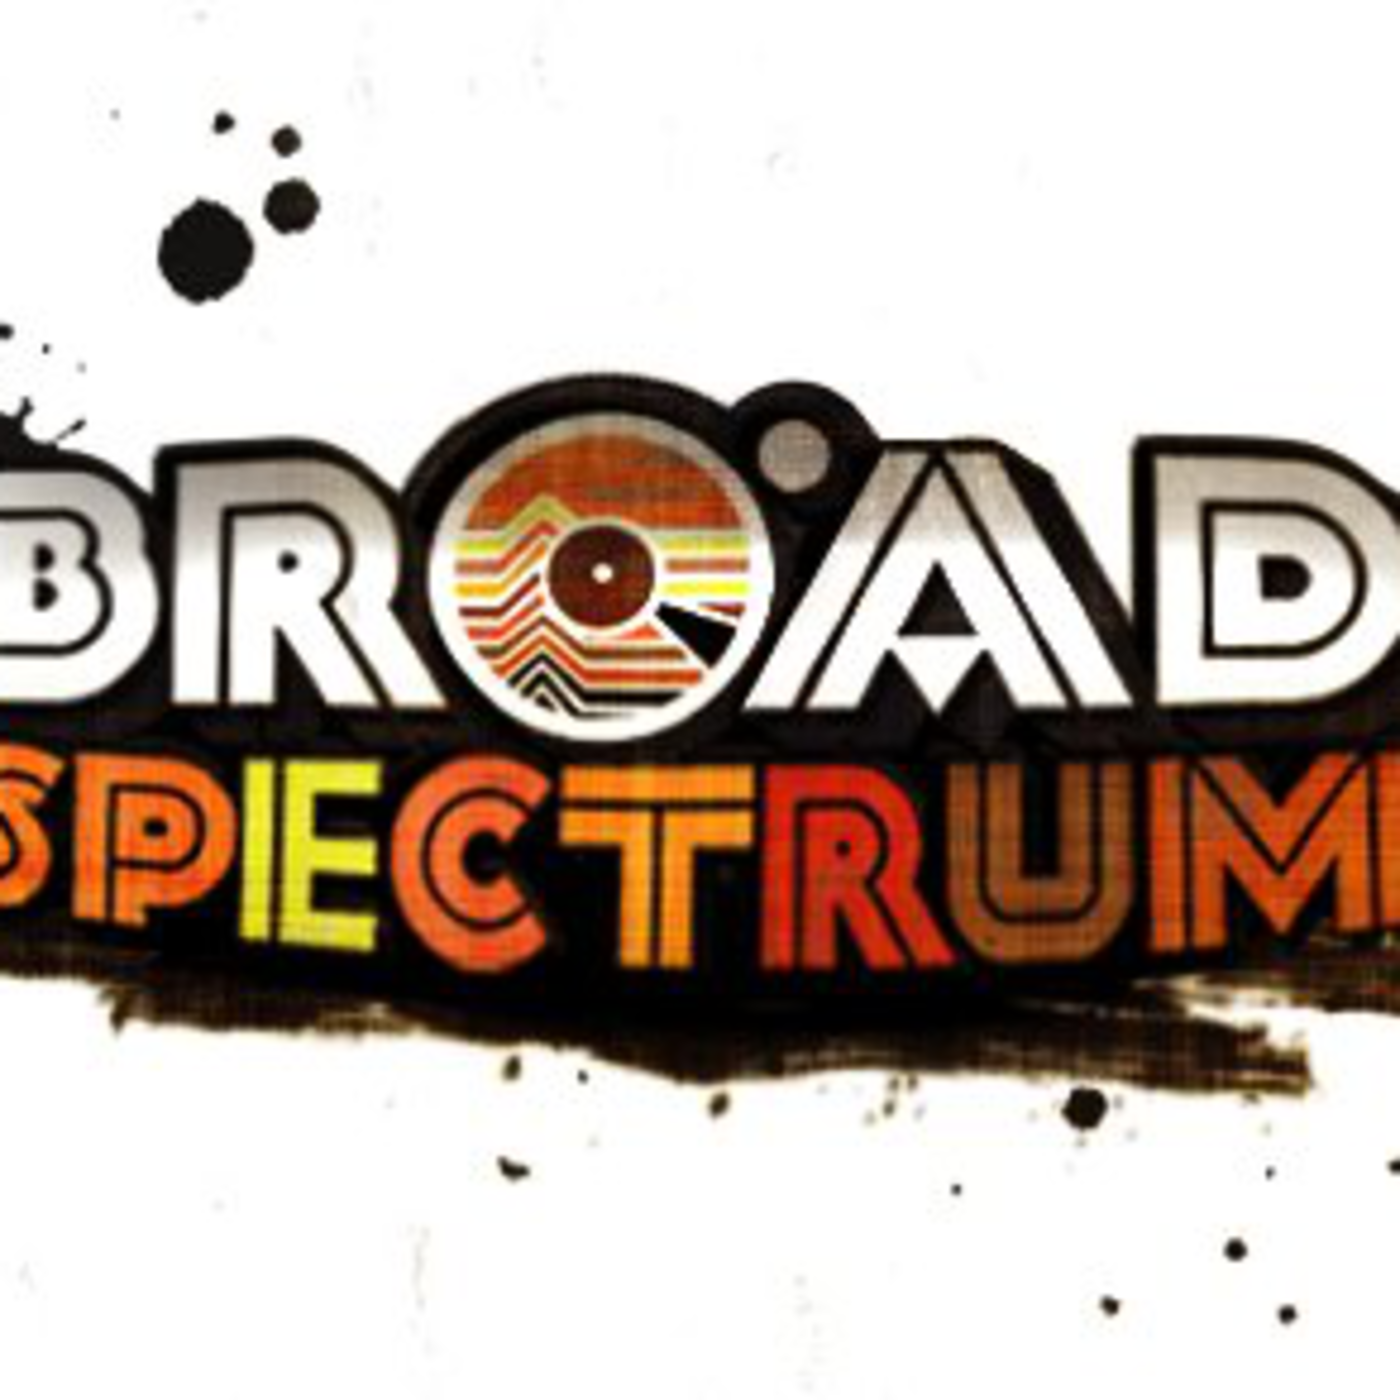 Broad Spectrum Episode 1